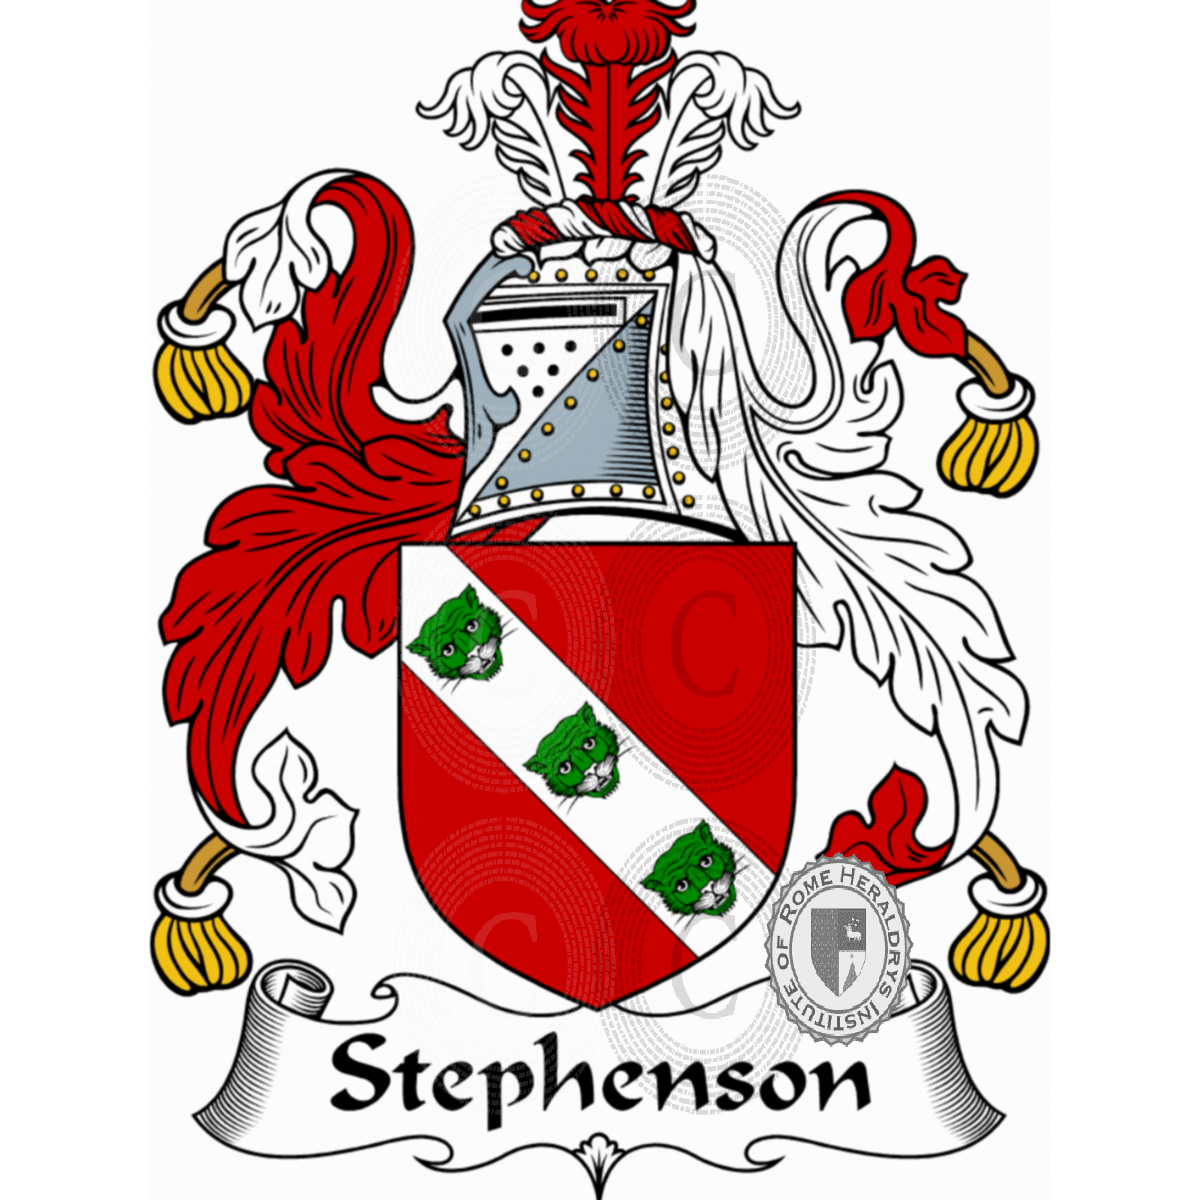 Brasão da famíliaStephenson, Stephenson